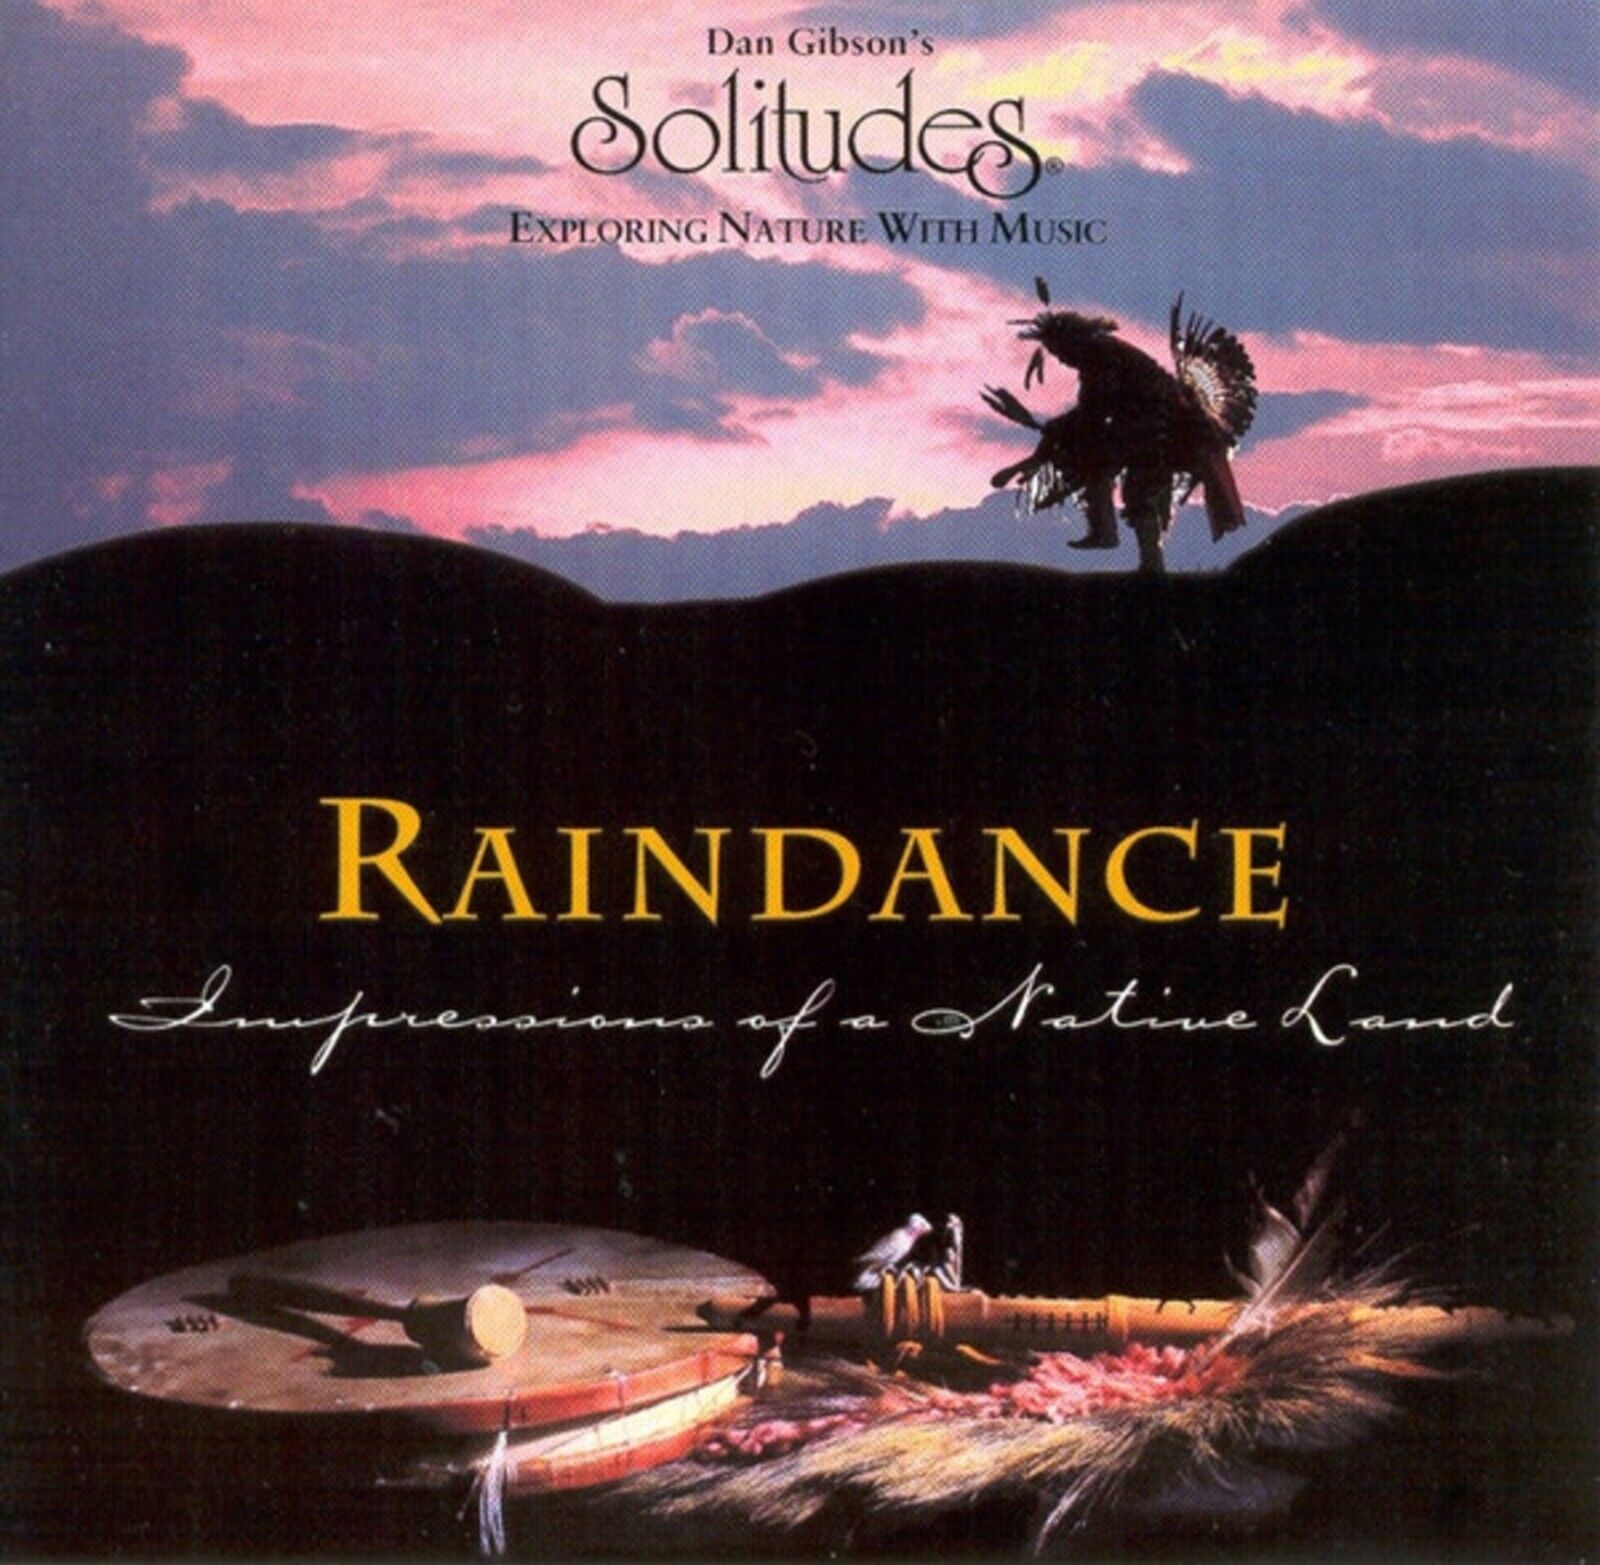 Dan Gibson Solitudes-Raindance Impressions of A Native Land CD